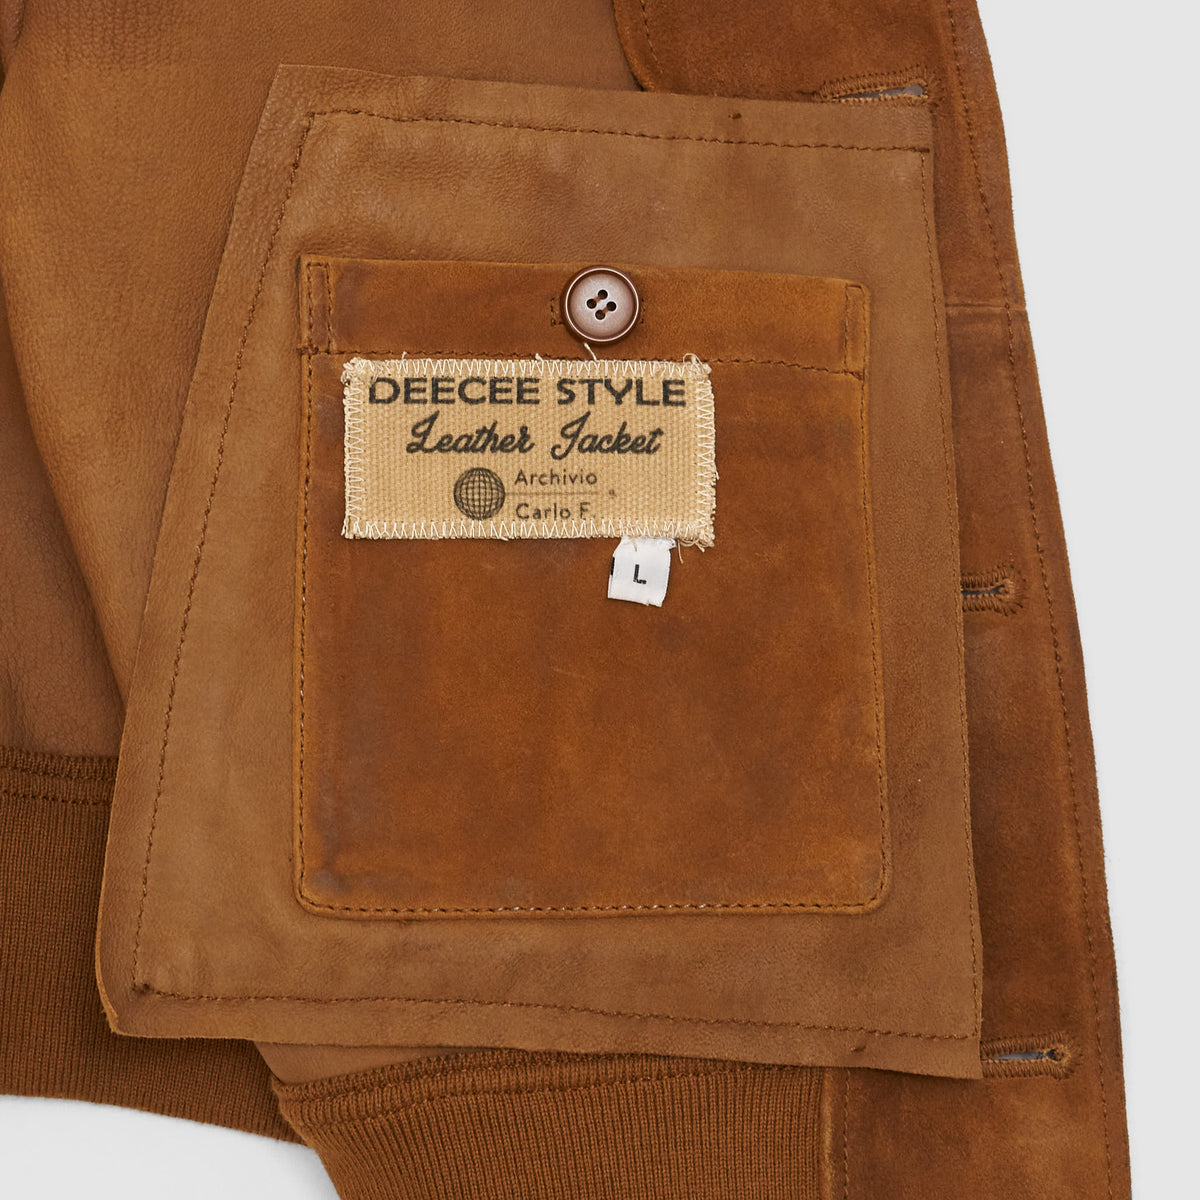 DeeCee style Harrington Leather Jacket